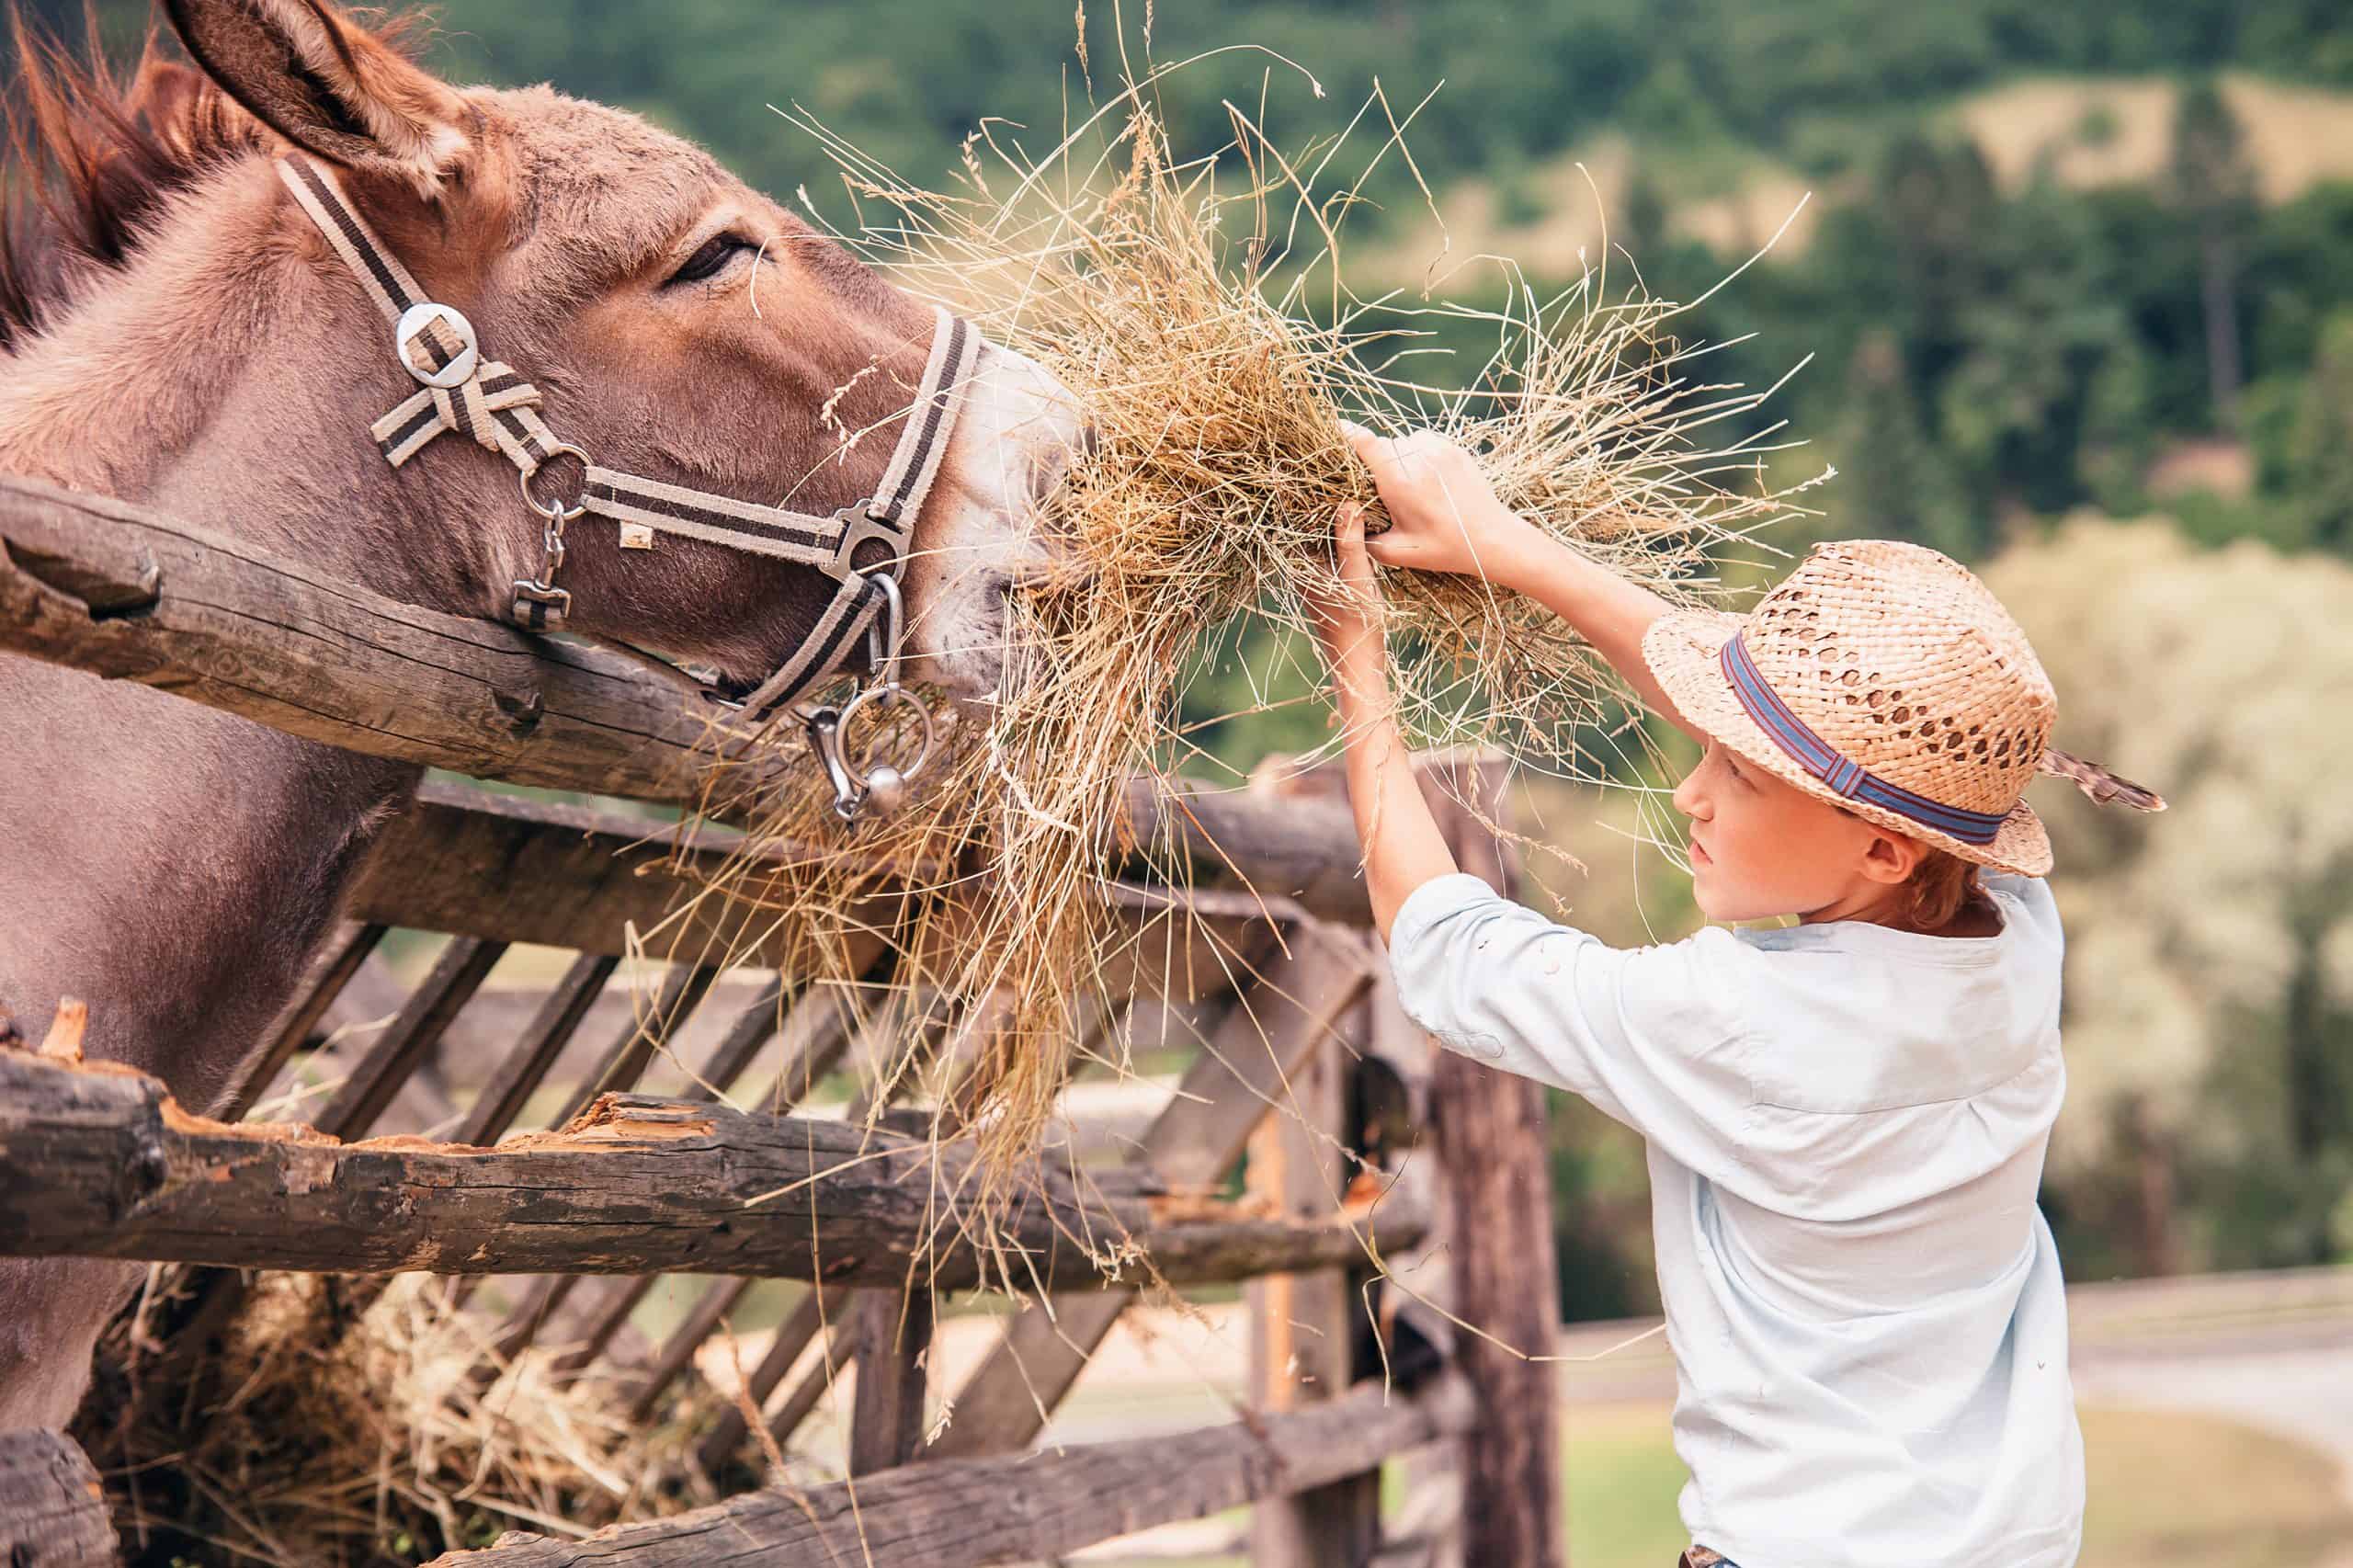 Boy helps to feed a donkey on the farm